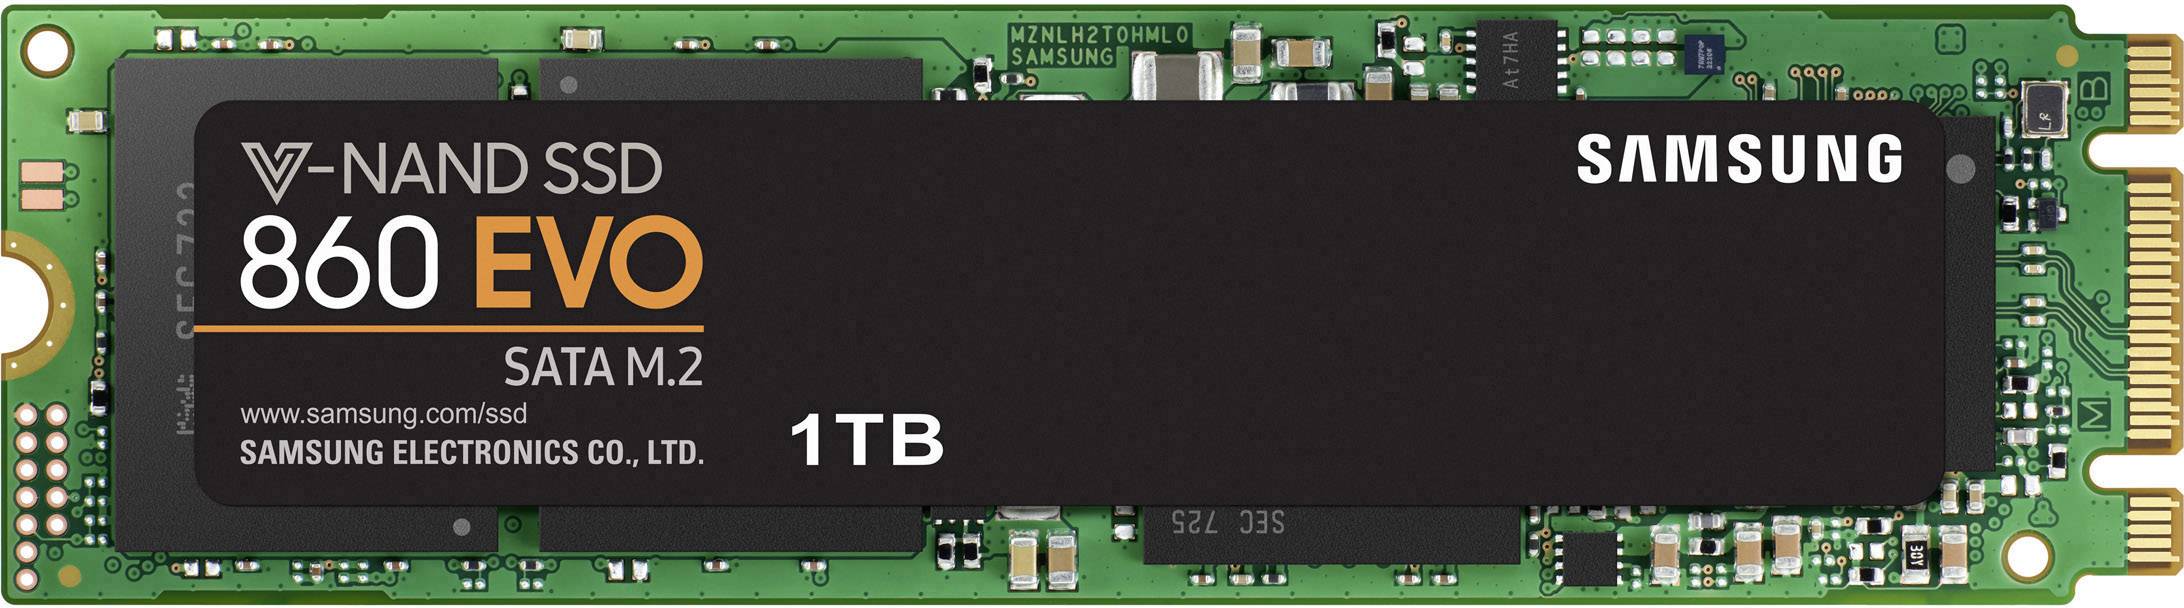 Samsung 860 EVO SATA M.2 internal SSD 2280 M.2 SATA 6 Retail MZ-N6E1T0BW | Conrad.com